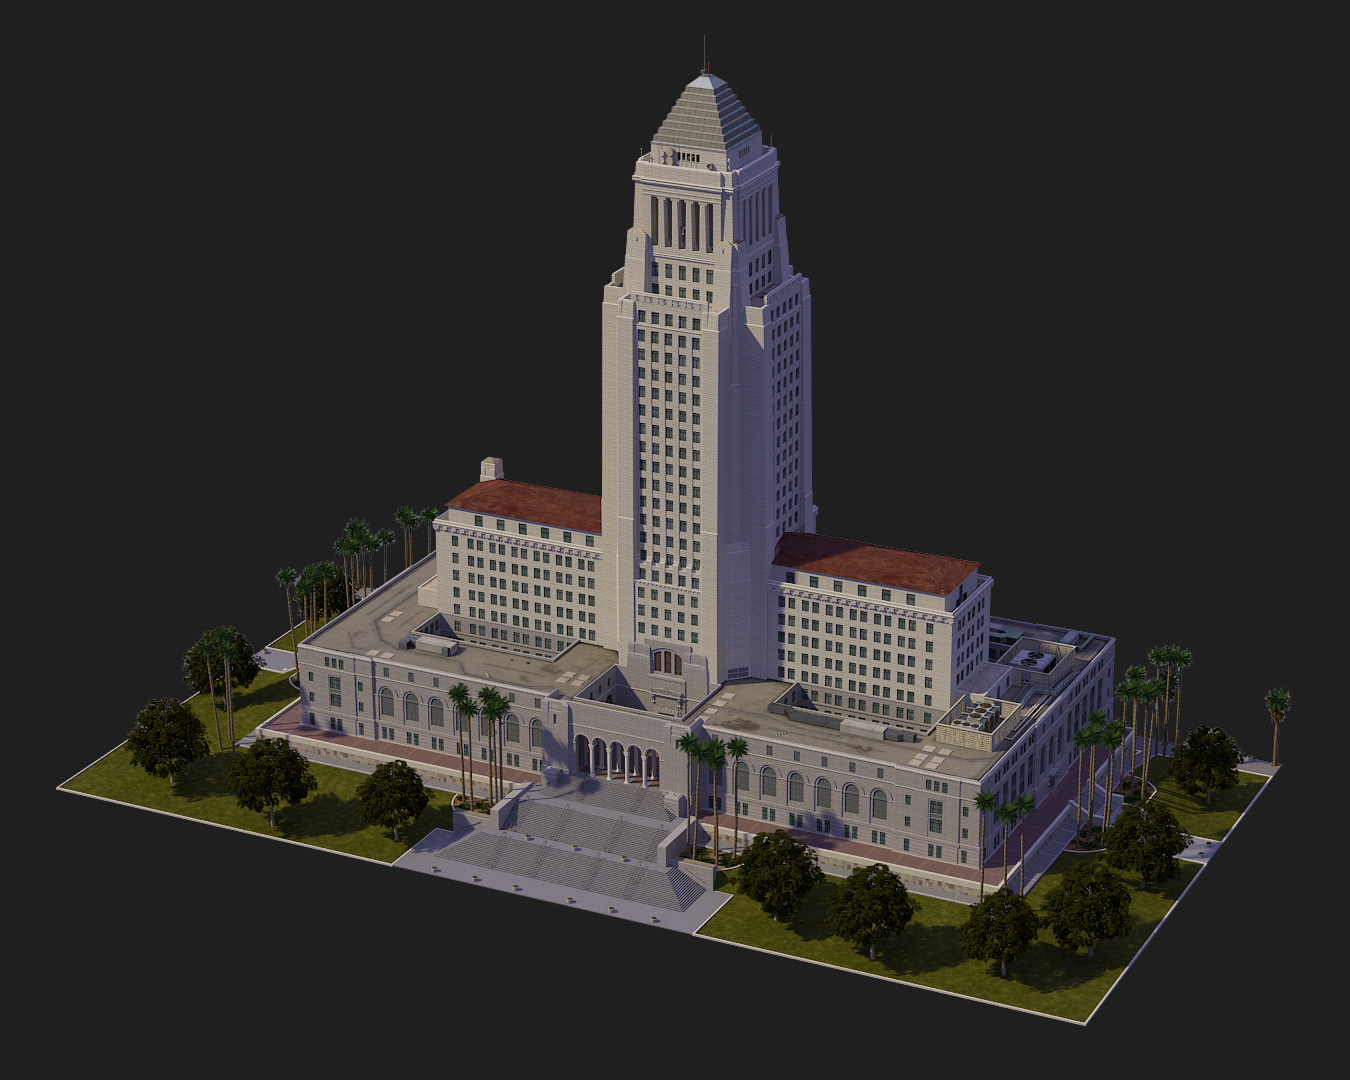 3 city hall